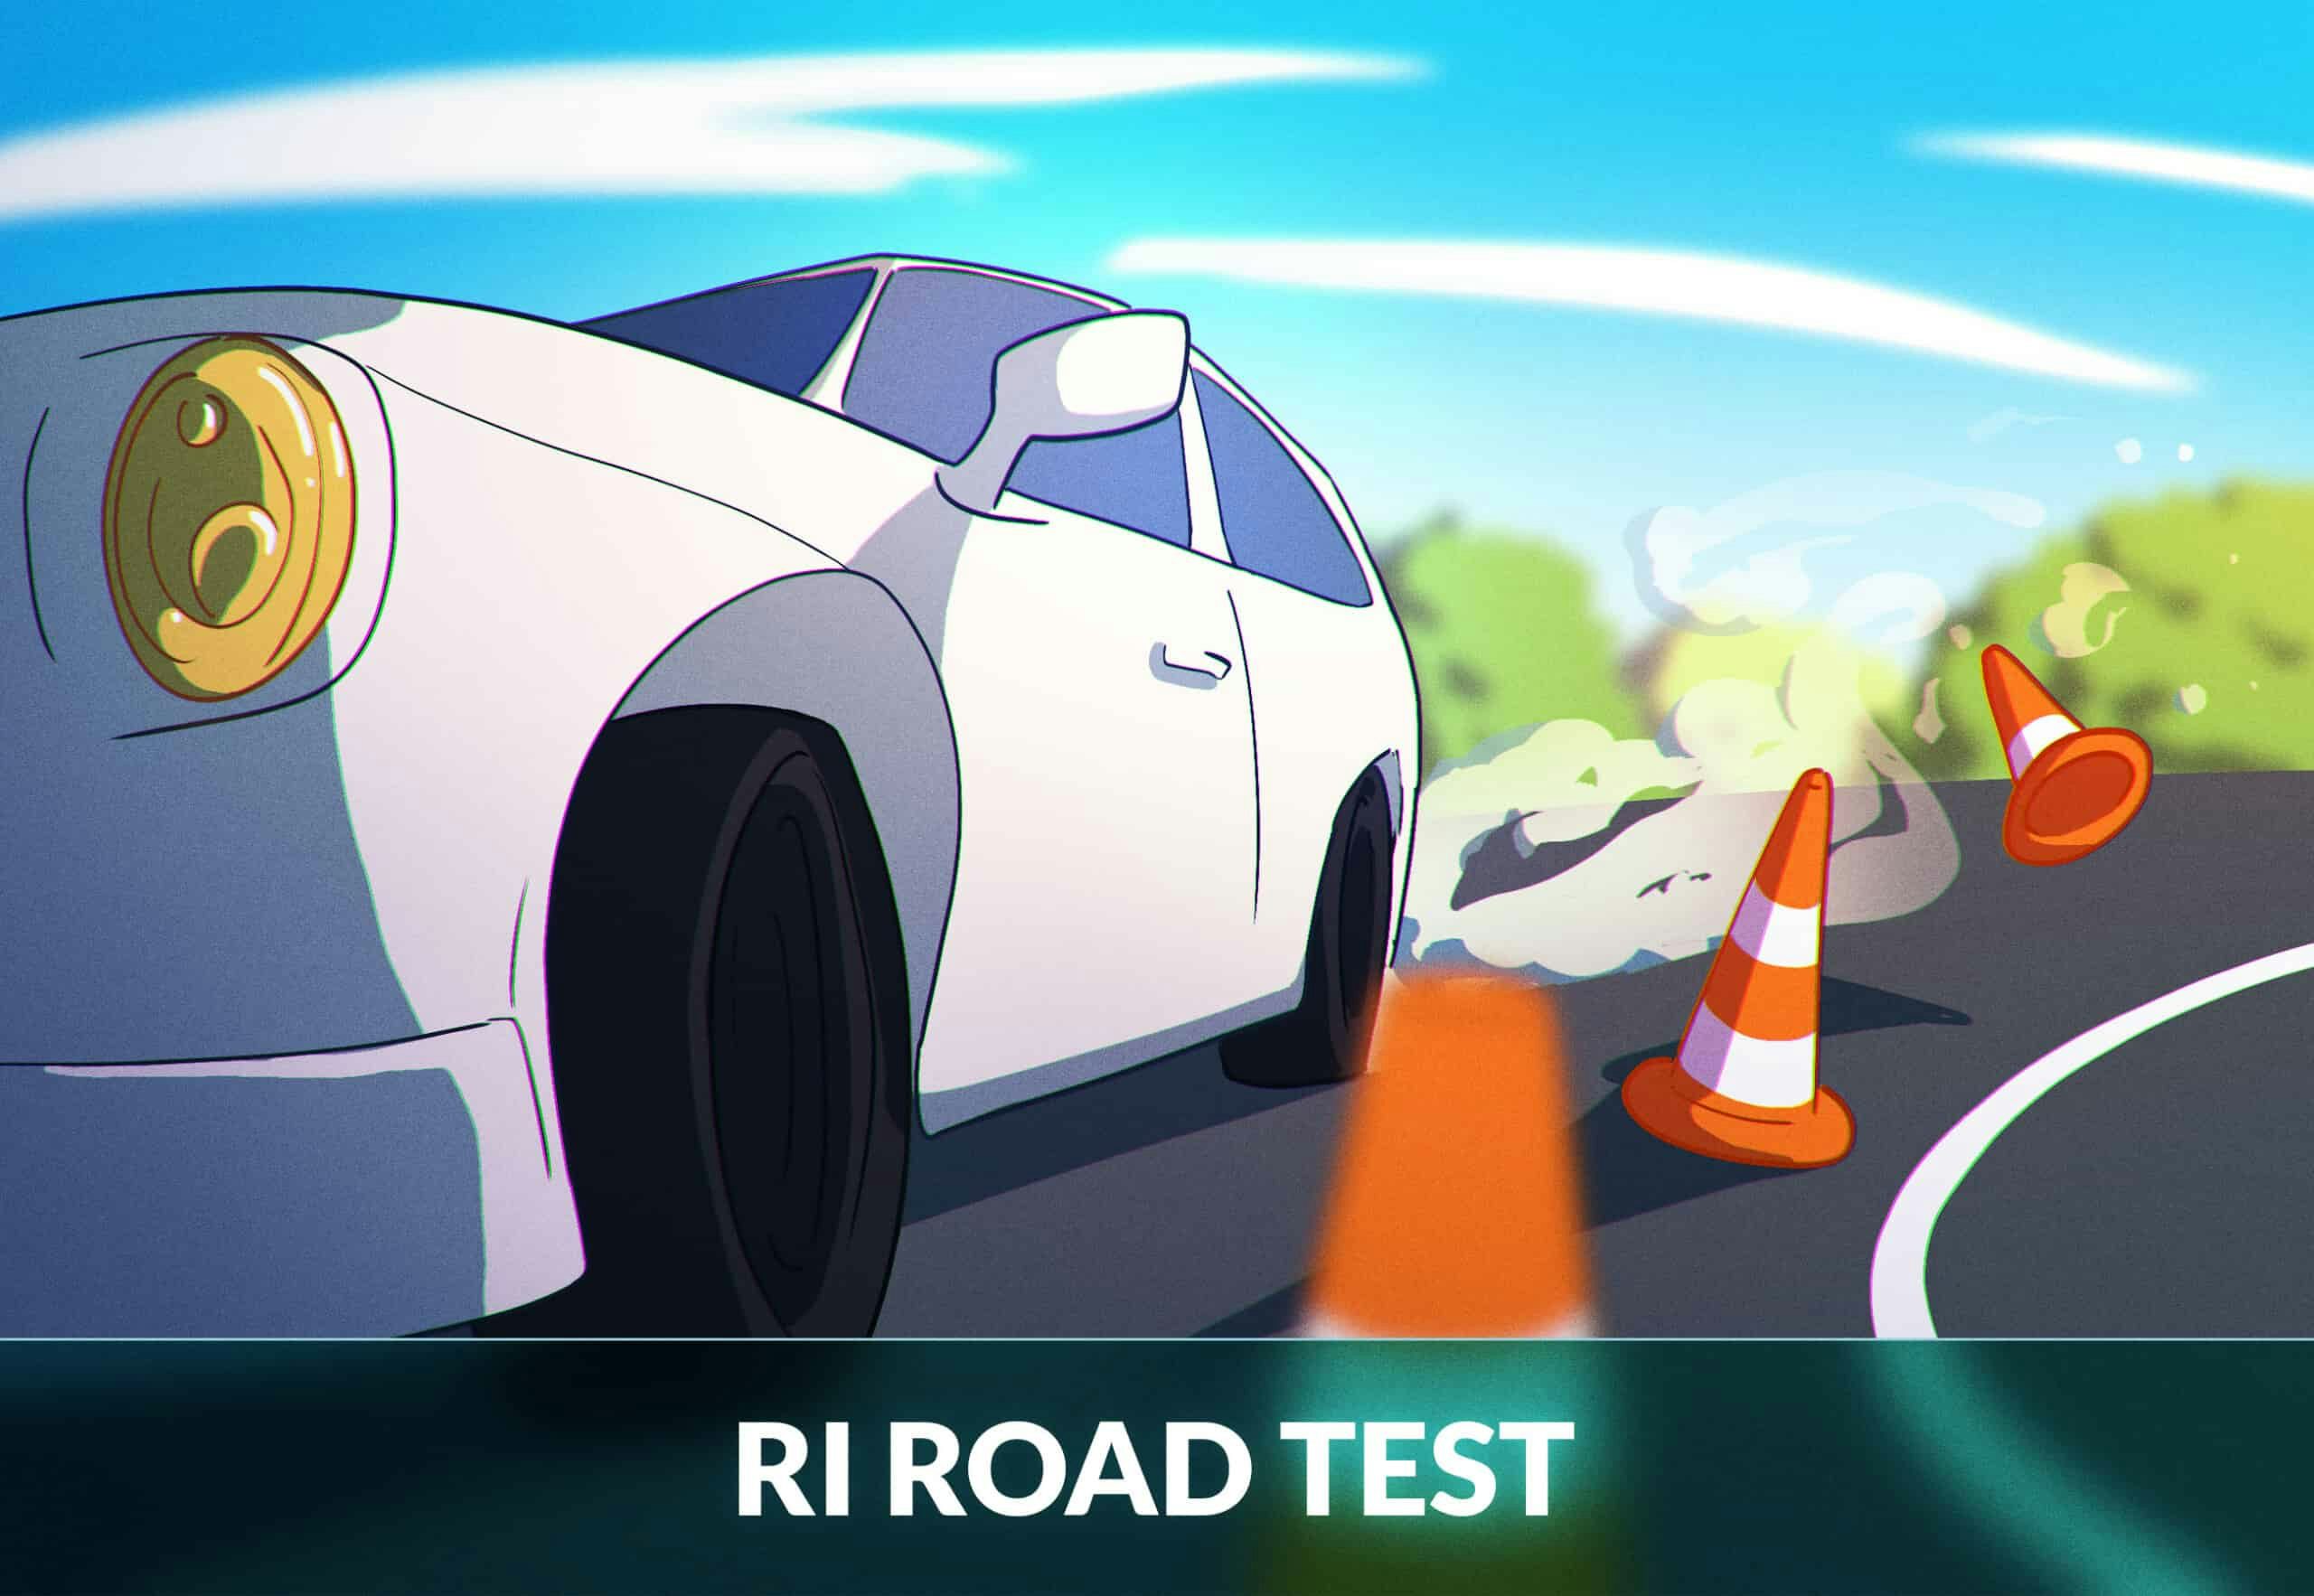 Rhode Island road test